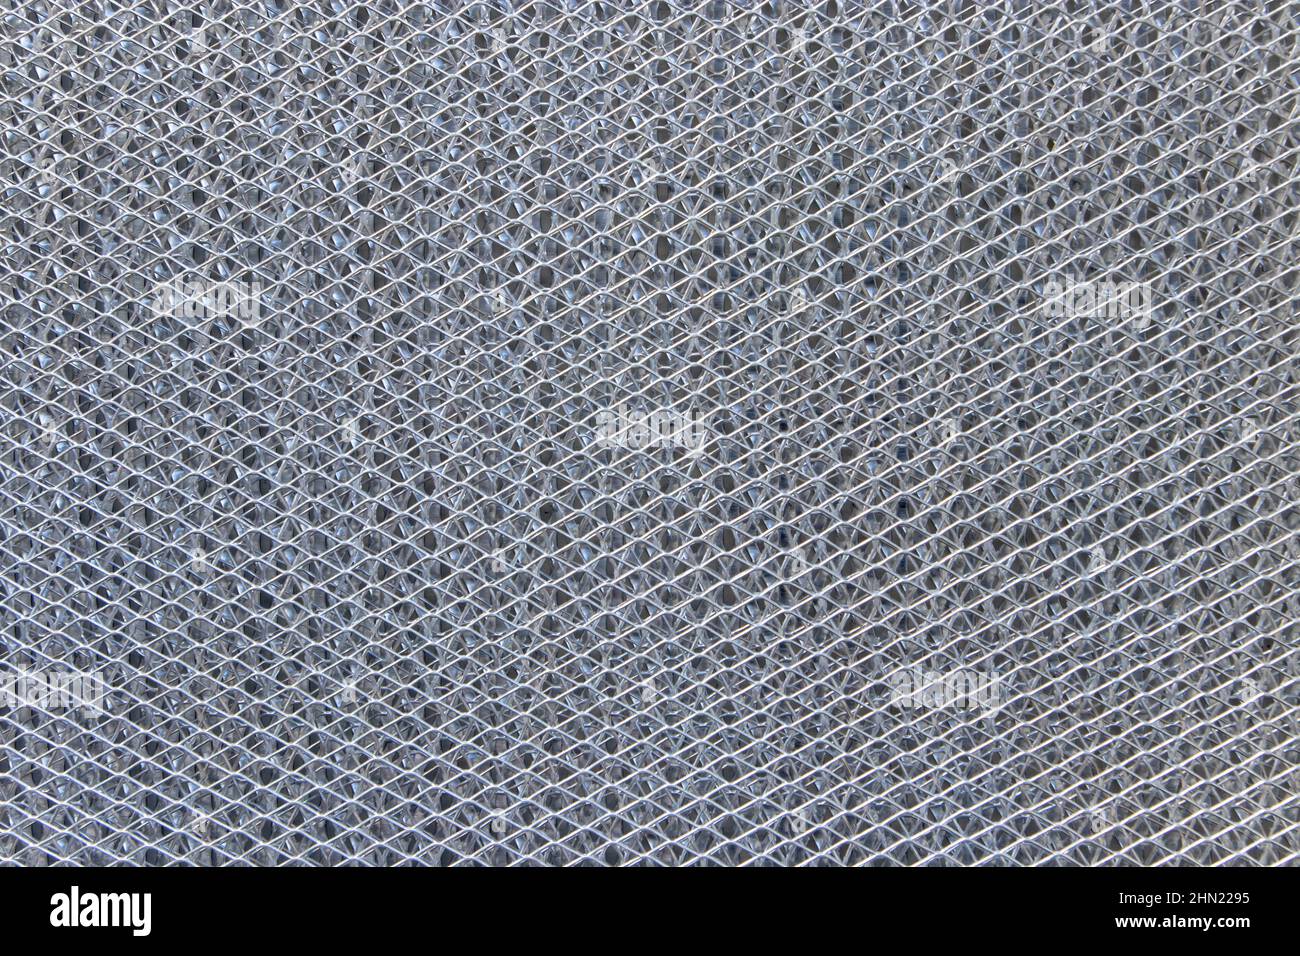 Shiny metallic futuristic technological background. Fine diamond-shaped metal mesh Stock Photo